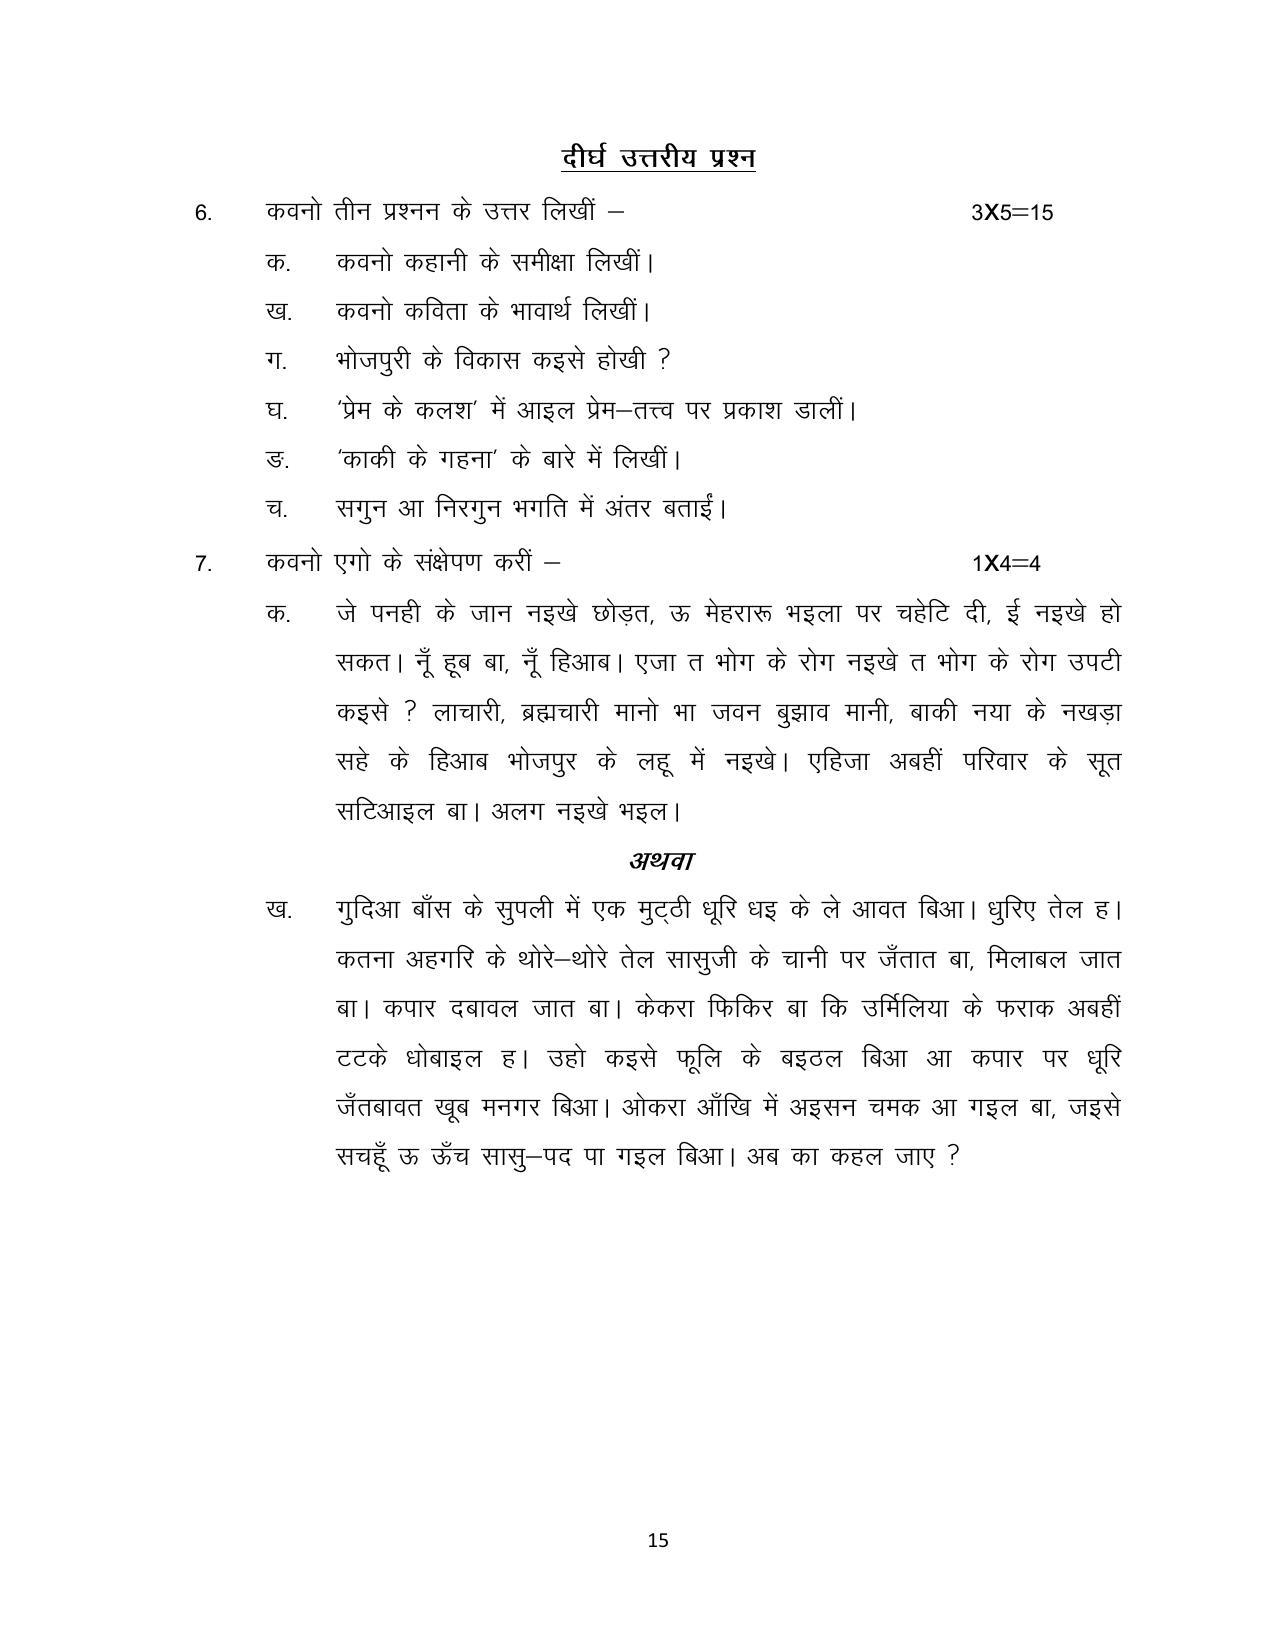 Bihar Board Class 12 Bhojpuri Model Paper - Page 15